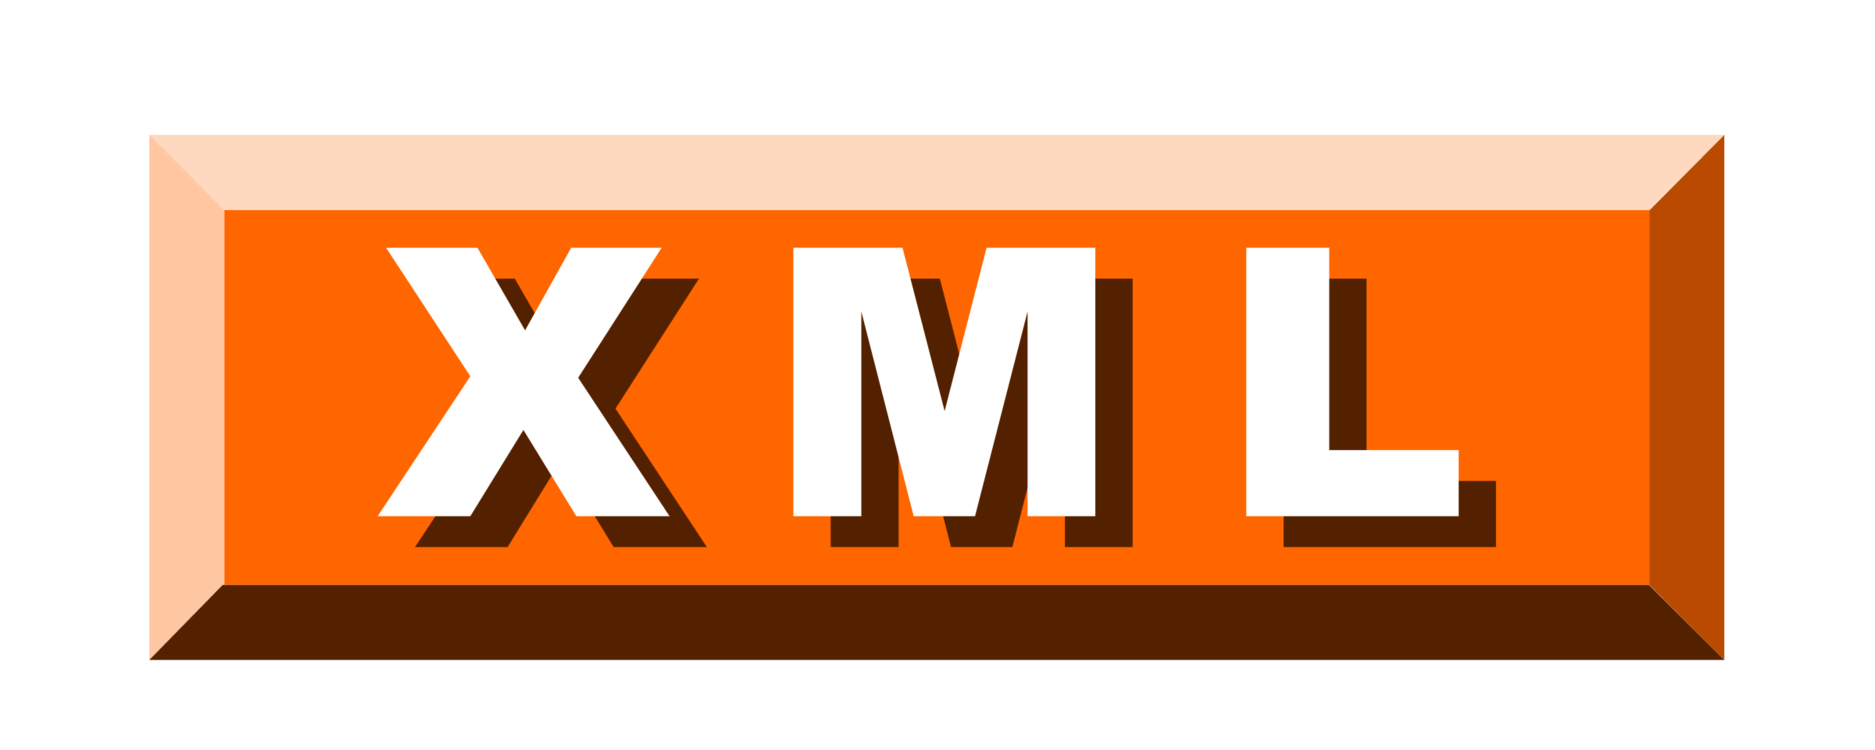 XML Logo - XML Logo Filename extension Brand Button free commercial clipart ...